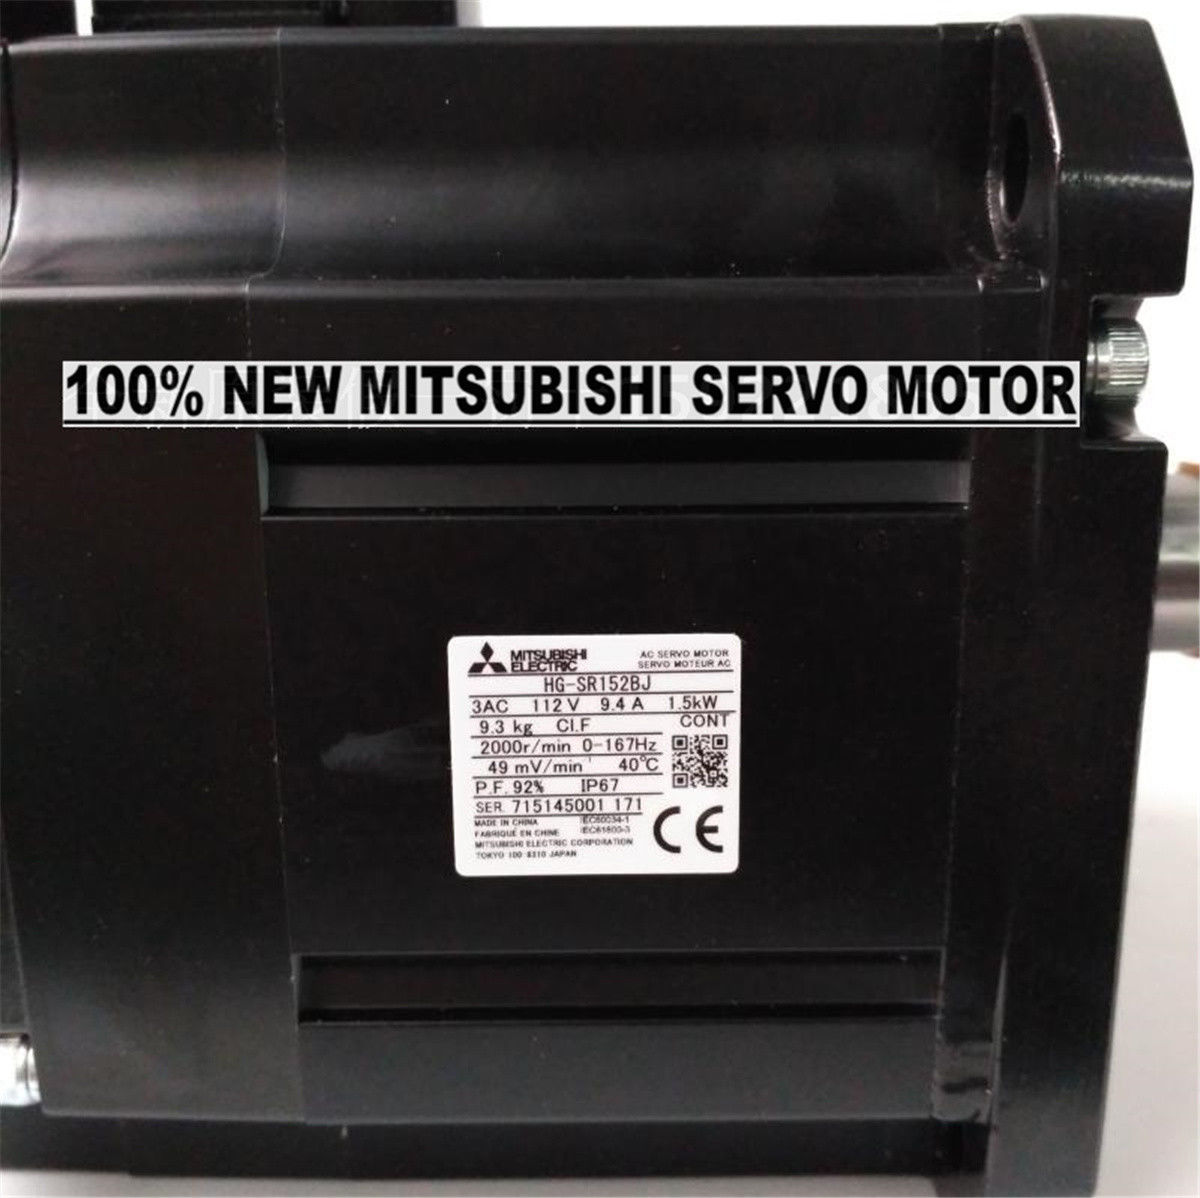 NEW Mitsubishi Servo Motor HG-SR152BJ in box HGSR152BJ - zum Schließen ins Bild klicken